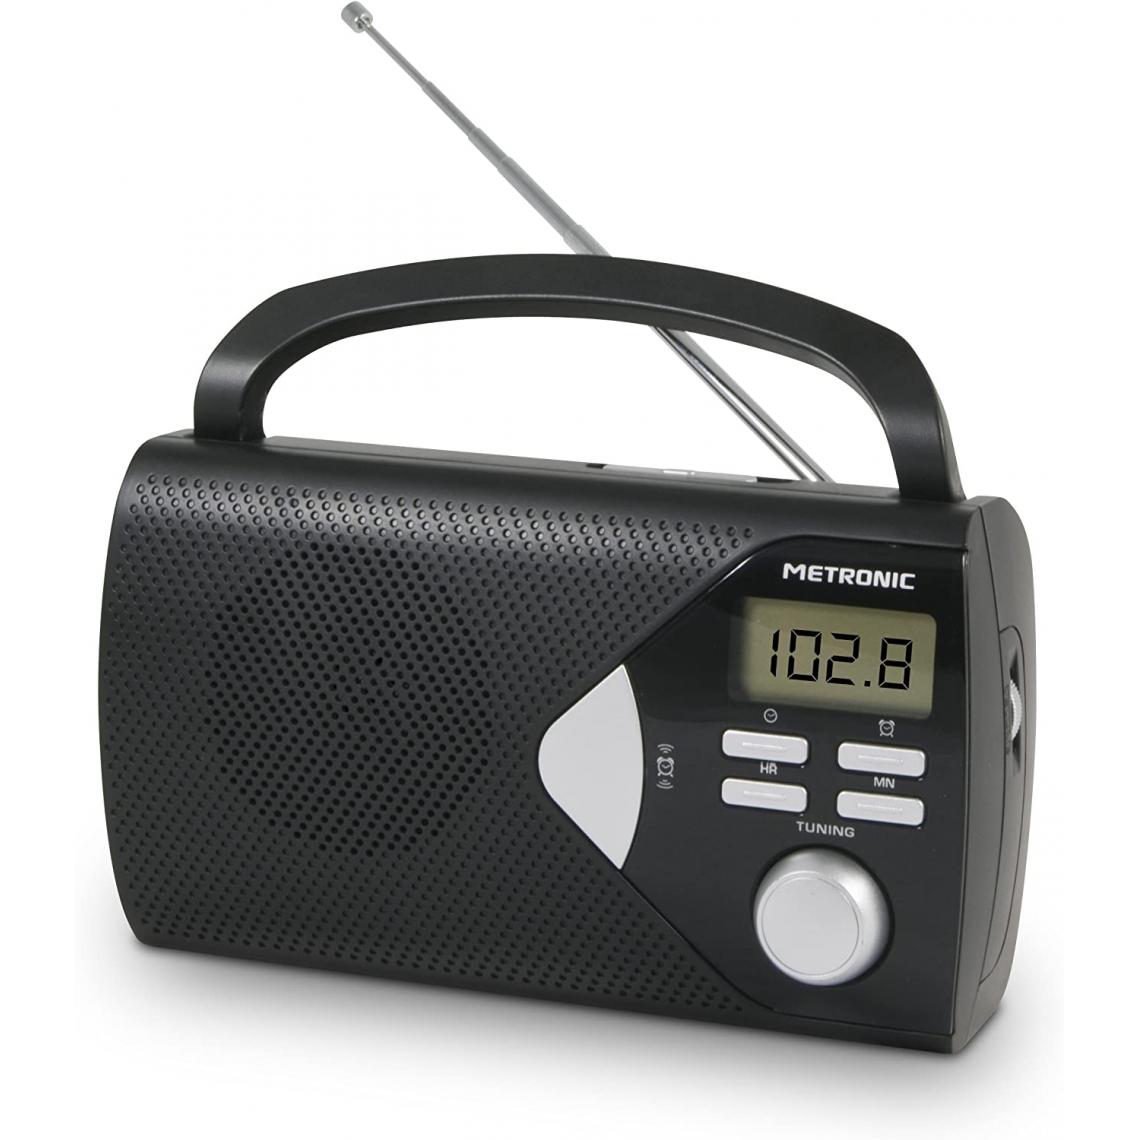 Metronic - radio réveil portable AM / FM noir - Radio